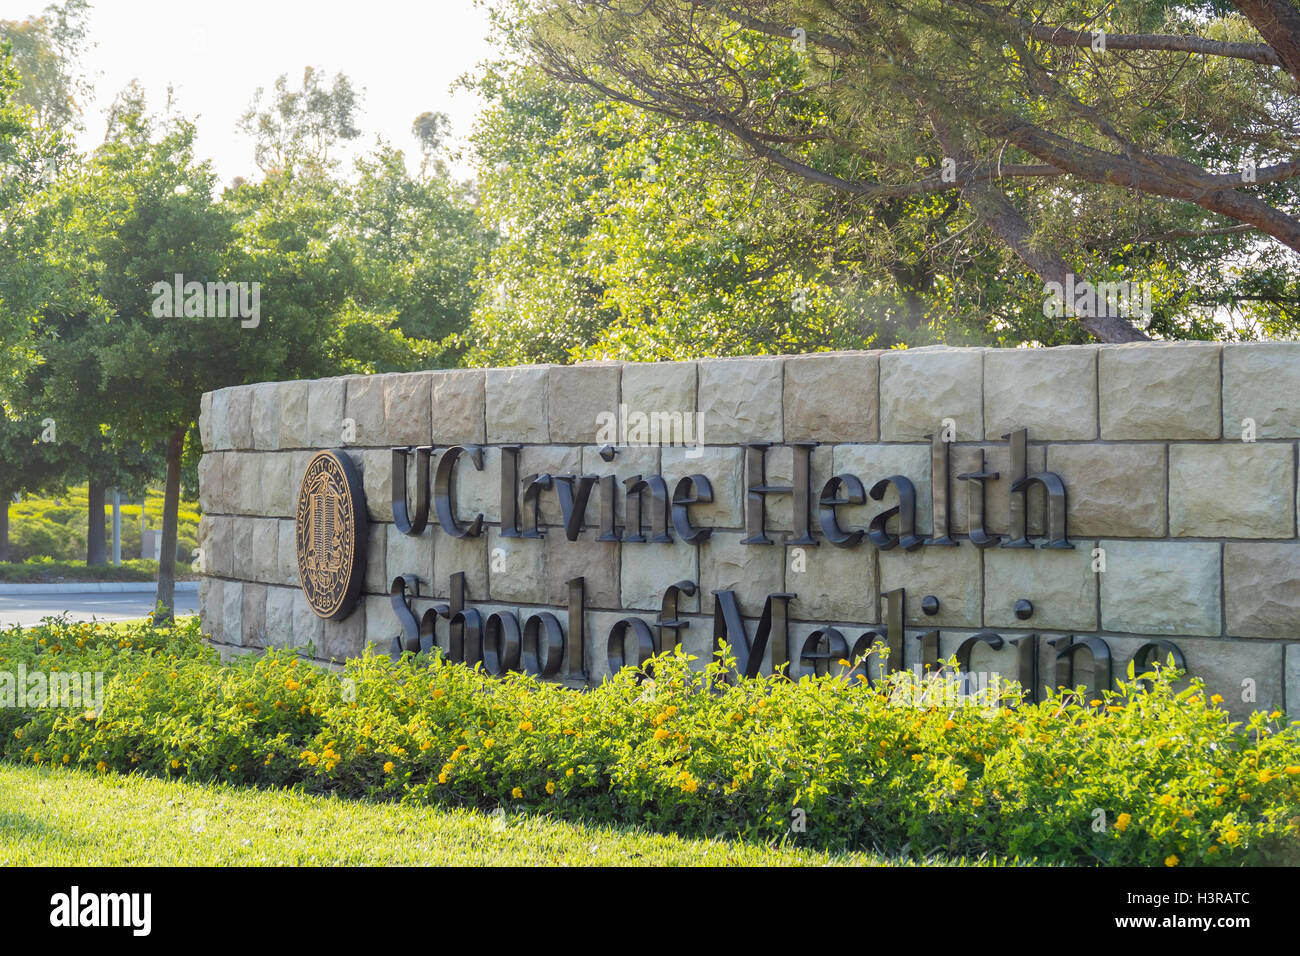 Irvine, 3 mai : entrée de UC Irvine Health School of Medicine le 3 mai 2016 à Irvine, Californie Banque D'Images